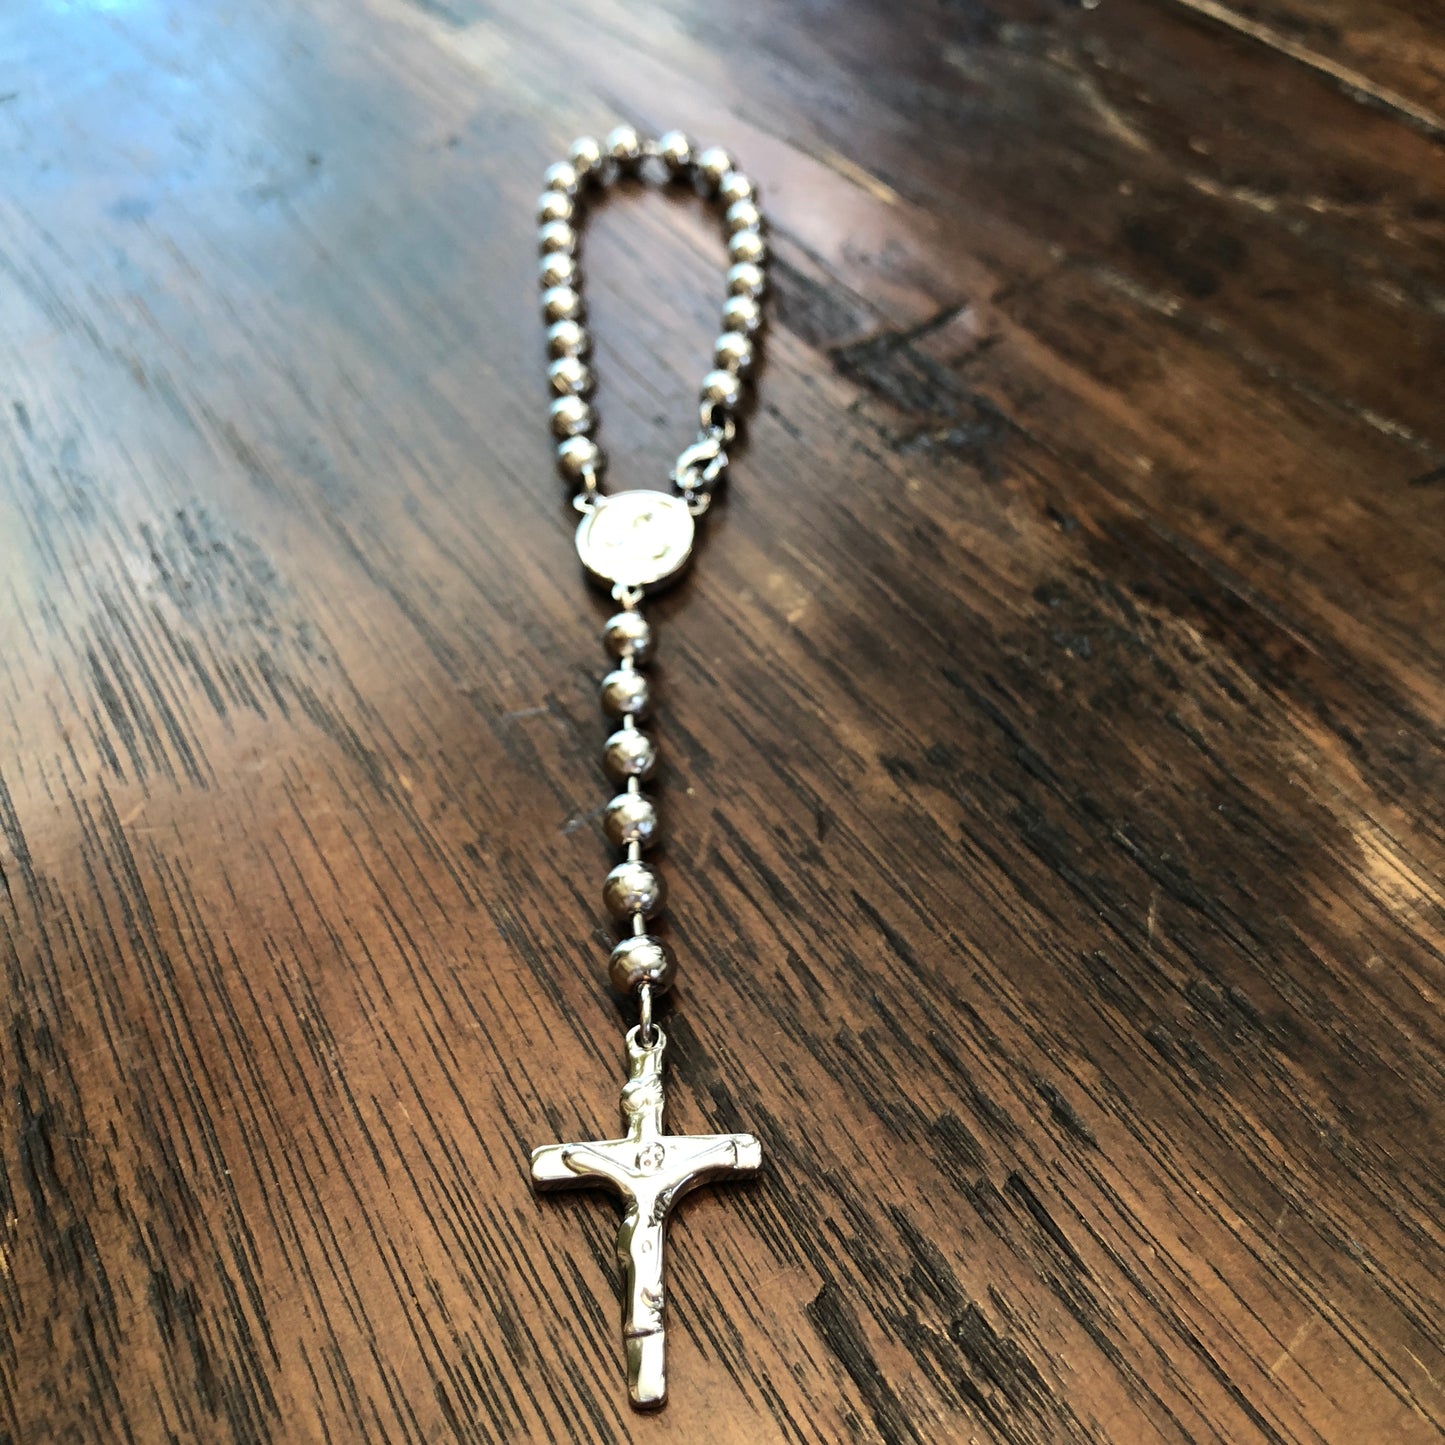 Rosary Inspired Door/Car Blessing